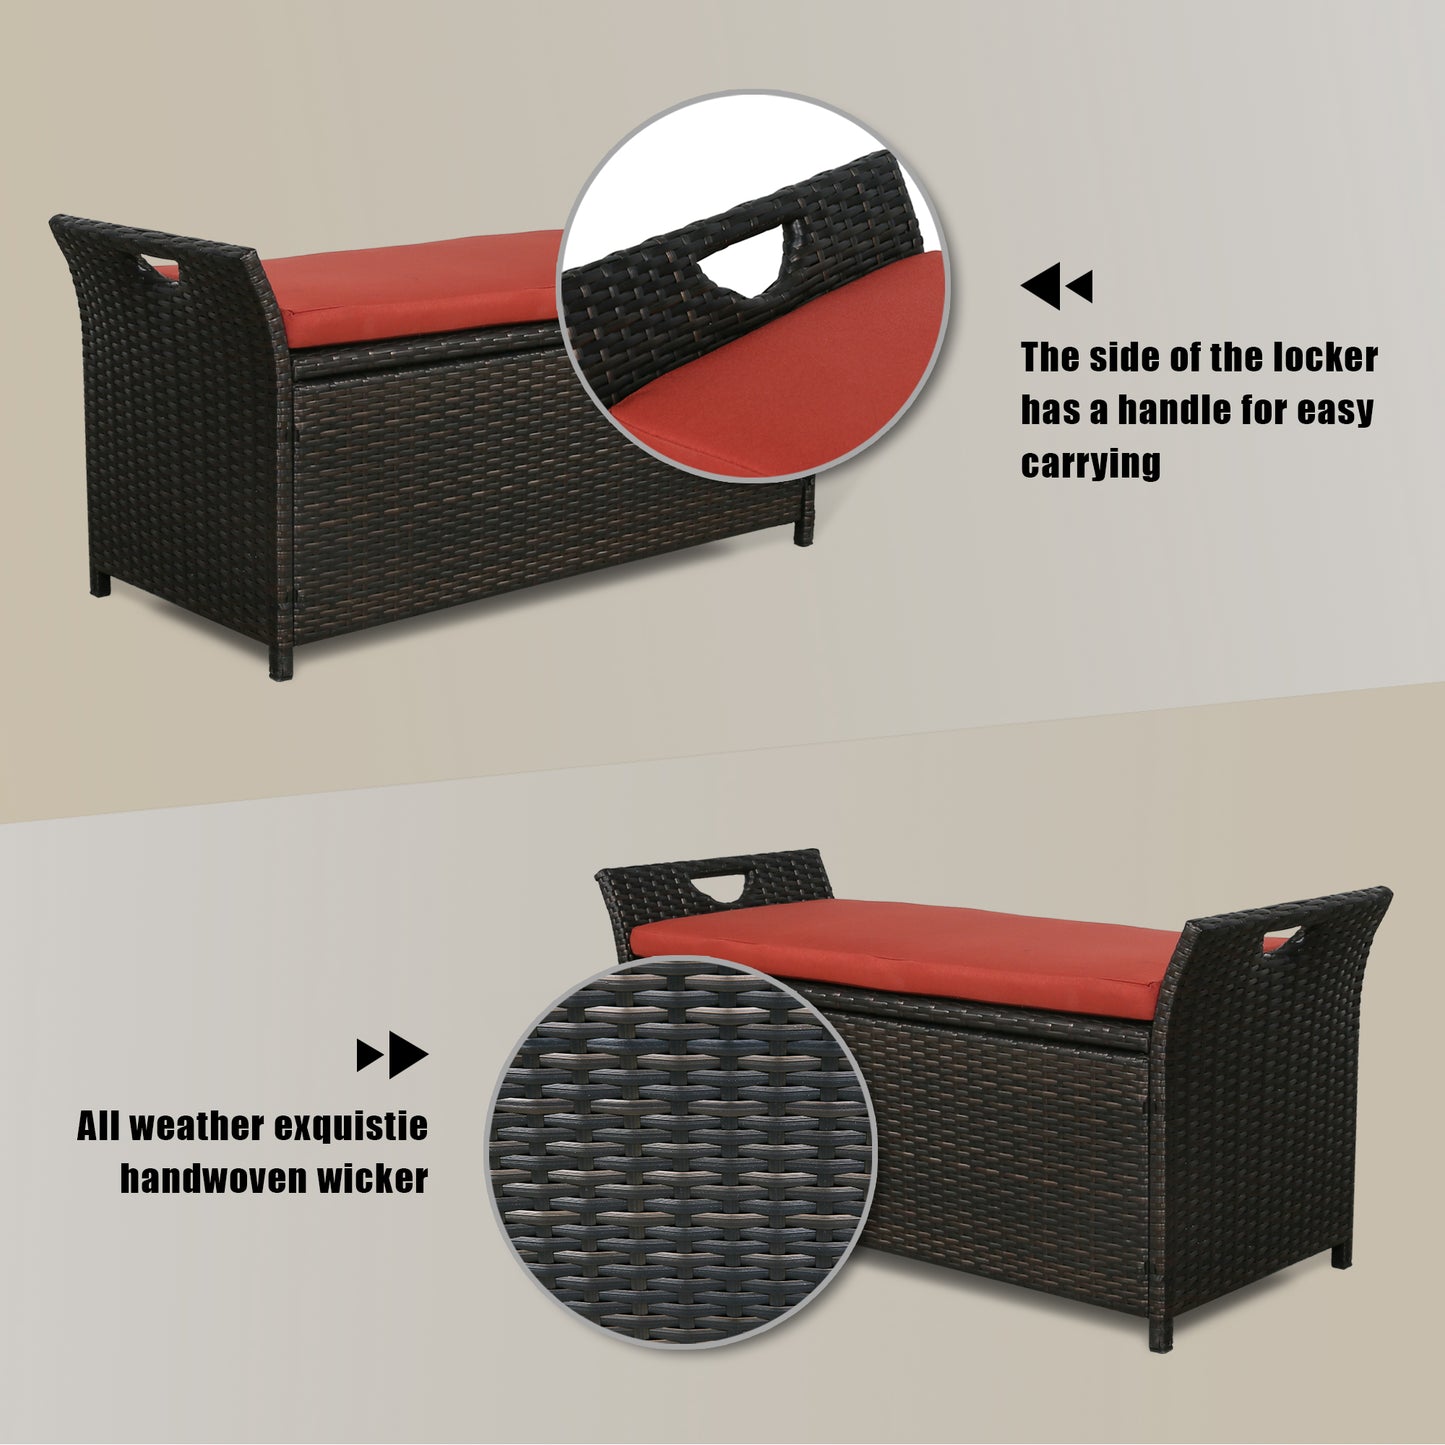 Outdoor Storage Bench Rattan Style Deck Box w/Cushion